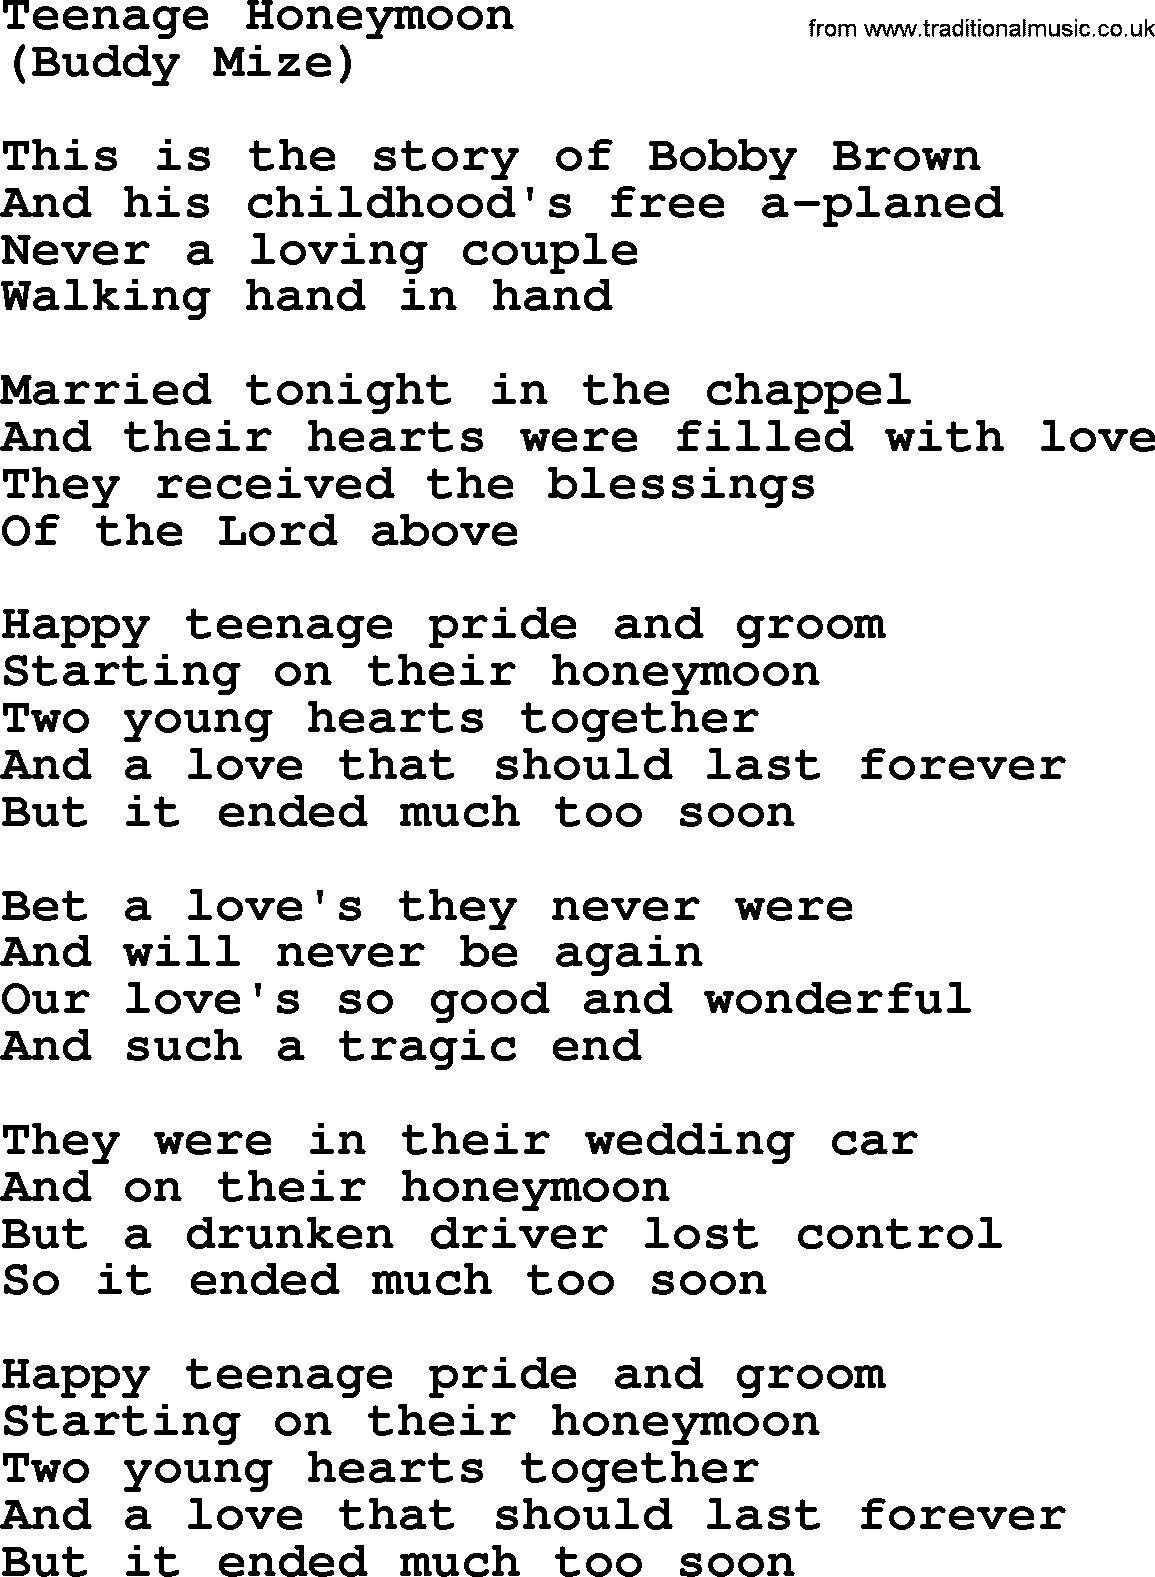 The Byrds song Teenage Honeymoon, lyrics